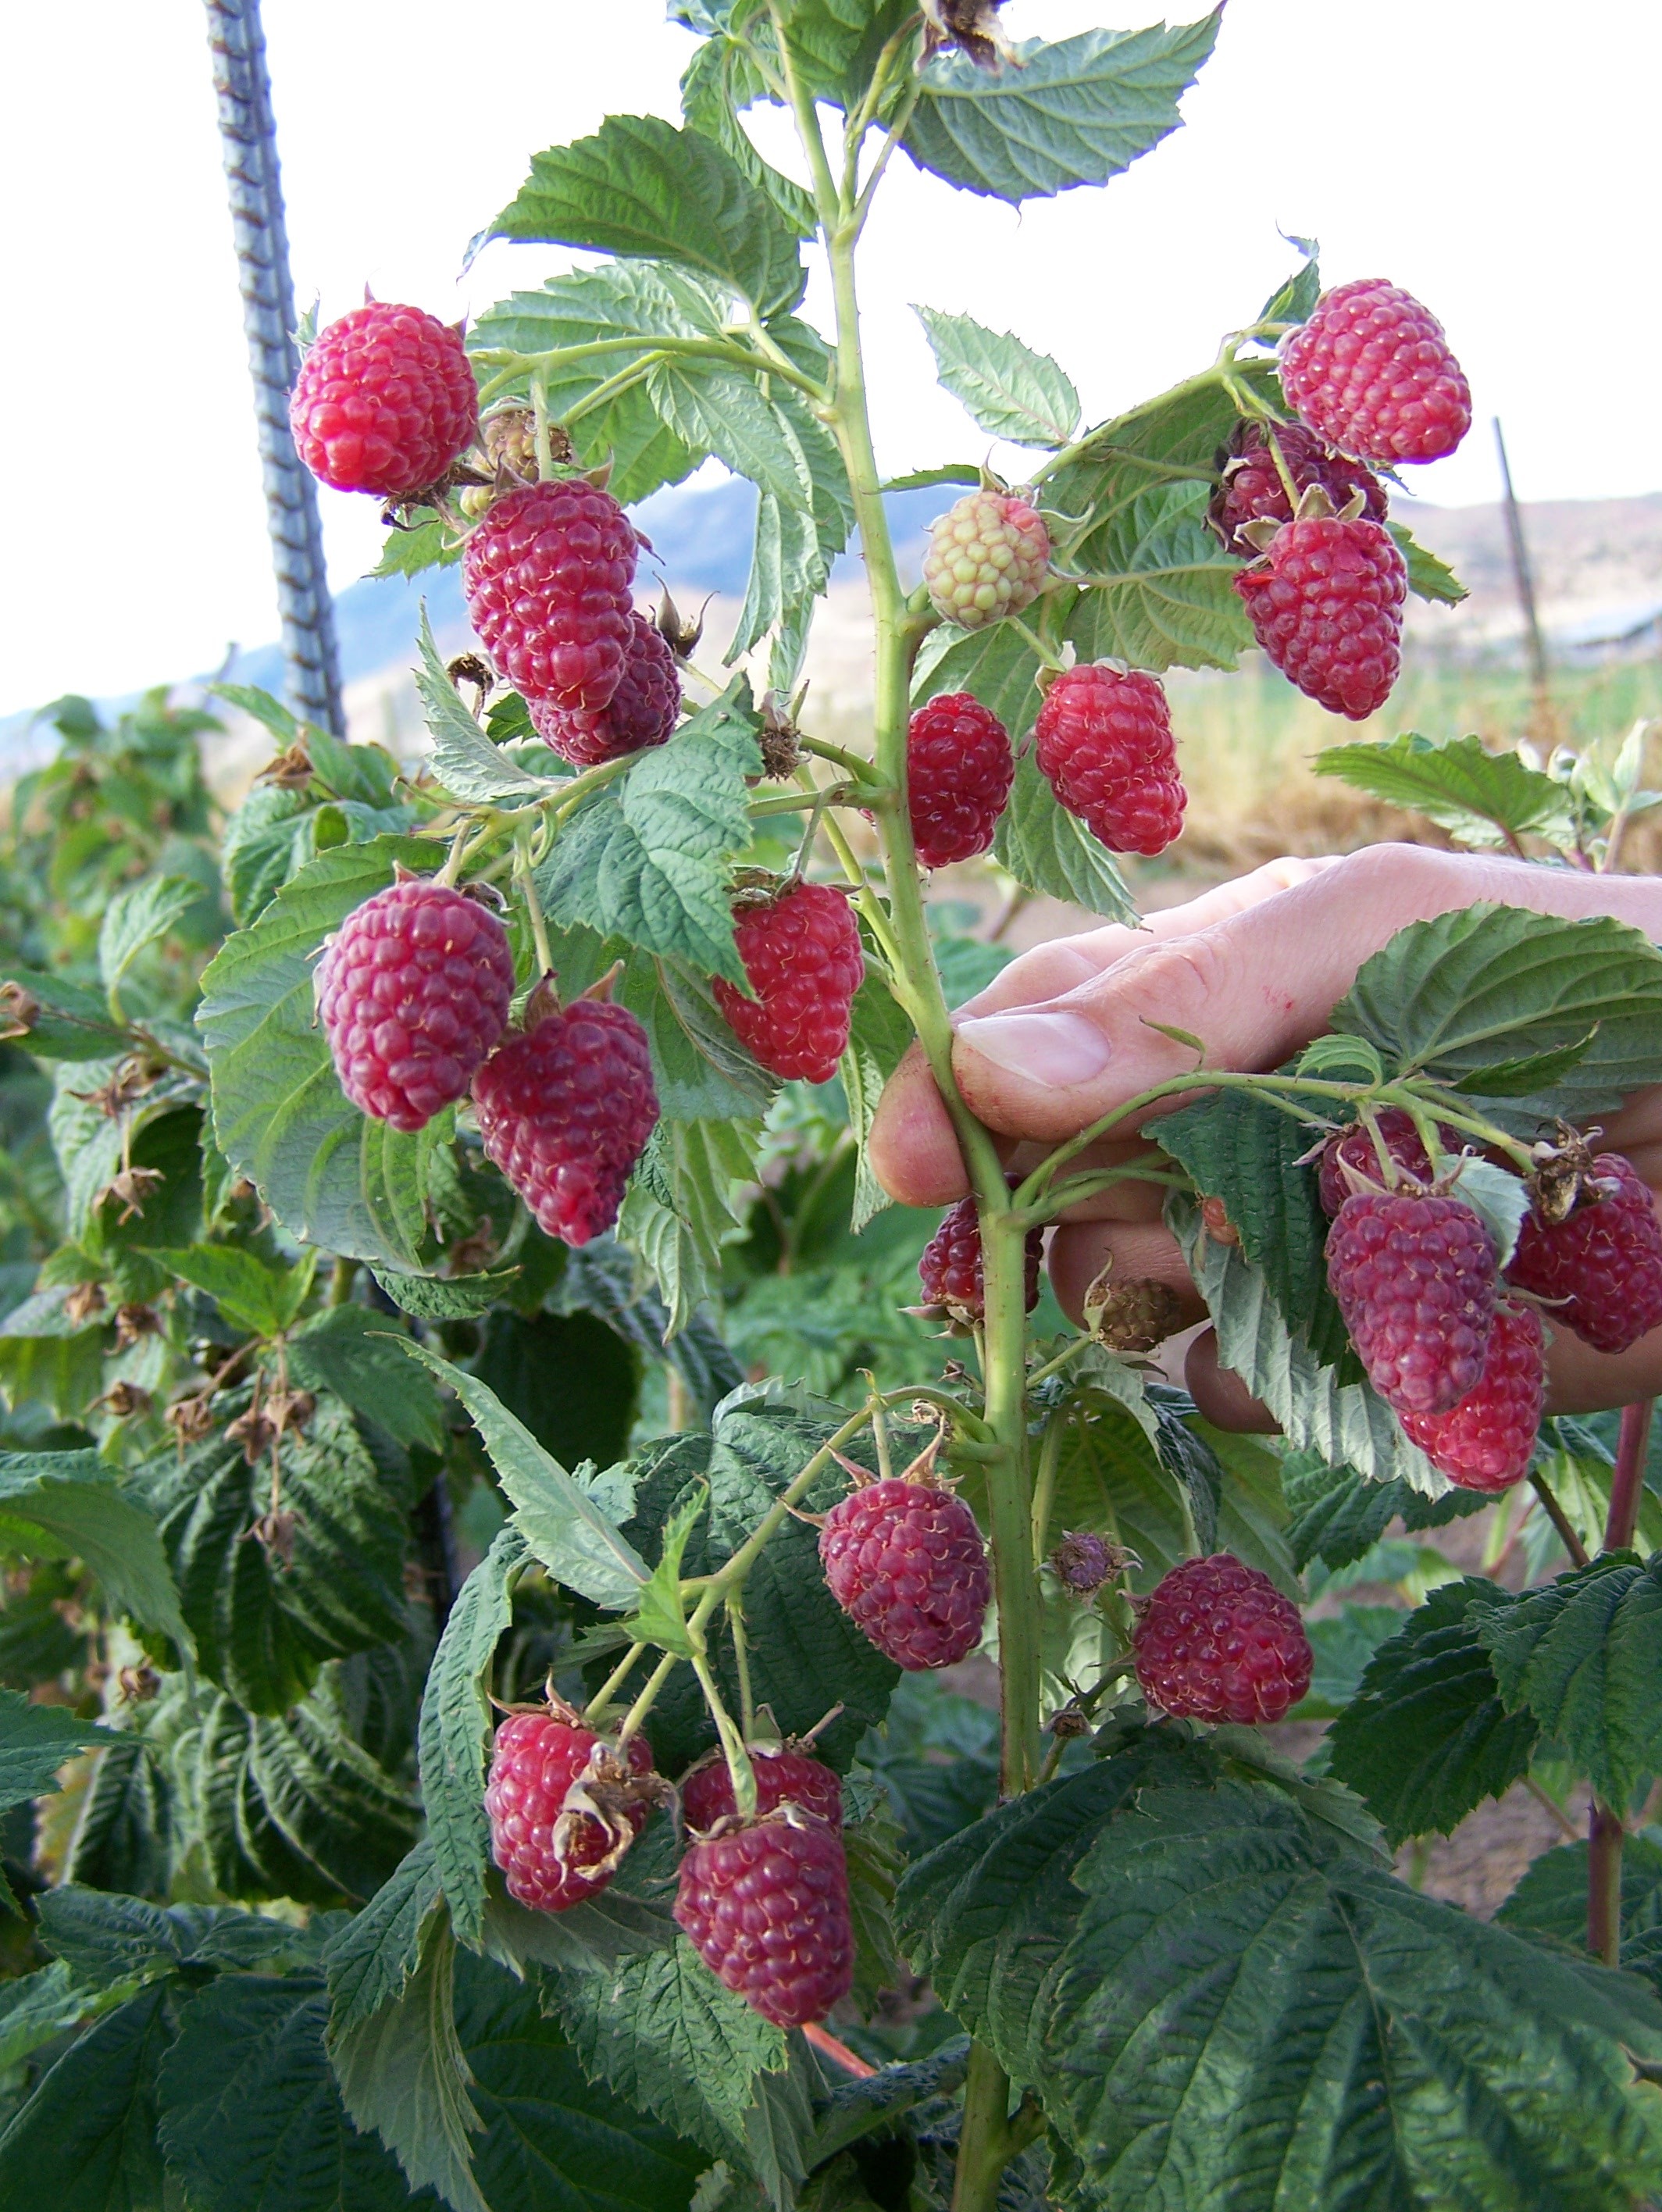 Growing Hydroponic Raspberries, part 1 | Hydroponics Blog - Hydroponics